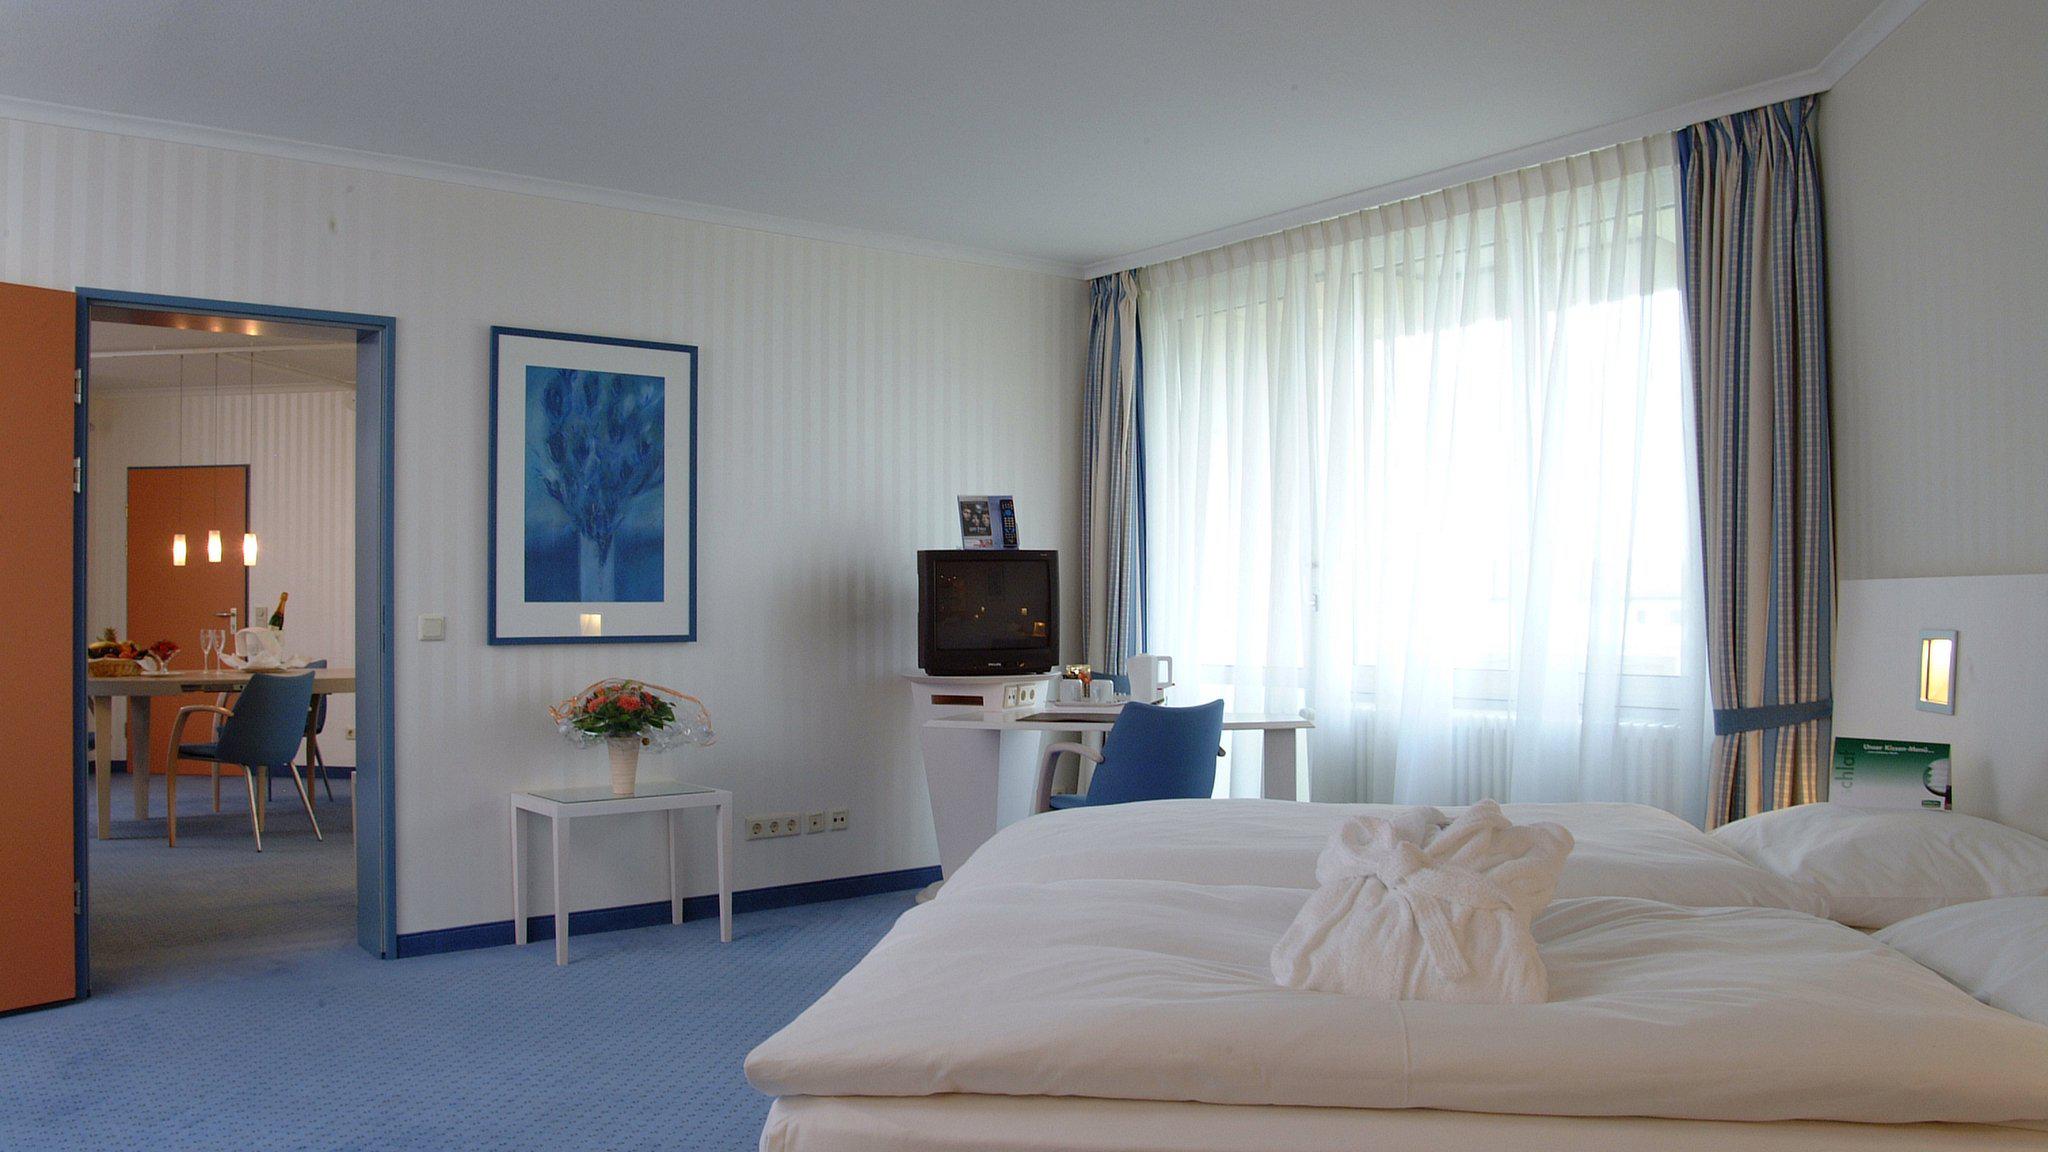 Holiday Inn Munich - South, an IHG Hotel, Kistlerhofstrasse 142 in München